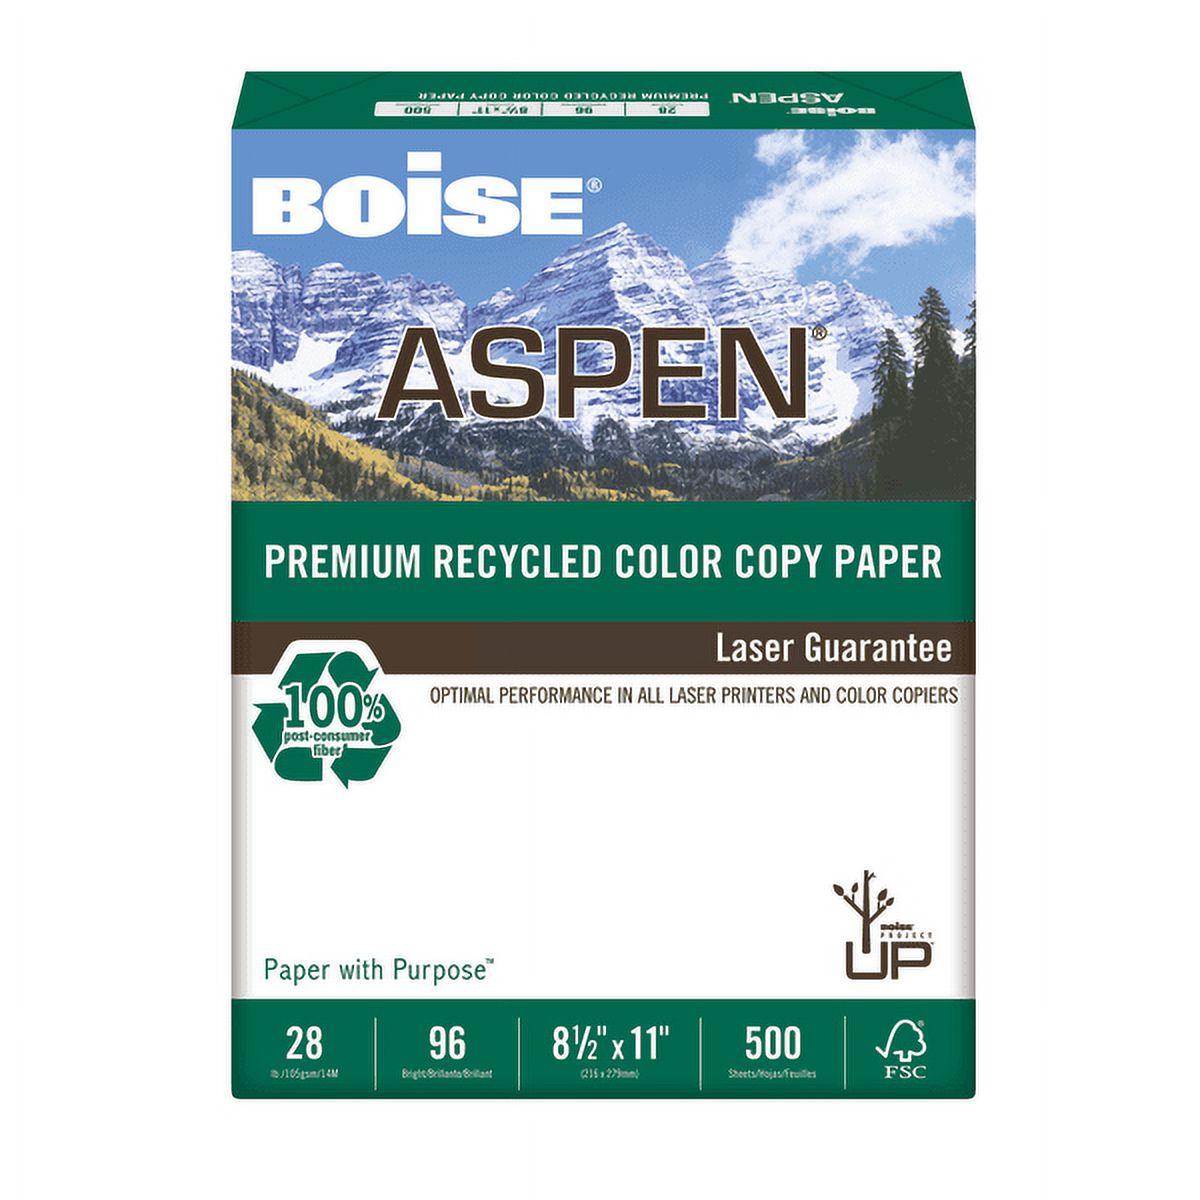 Boise® ASPEN® Premium Color Copy Paper, Letter Size (8 1/2" x 11"), 96 (U.S.) Brightness, 28 Lb, 100% Recycled, FSC® Certified, Ream Of 500 Sheets - image 1 of 2